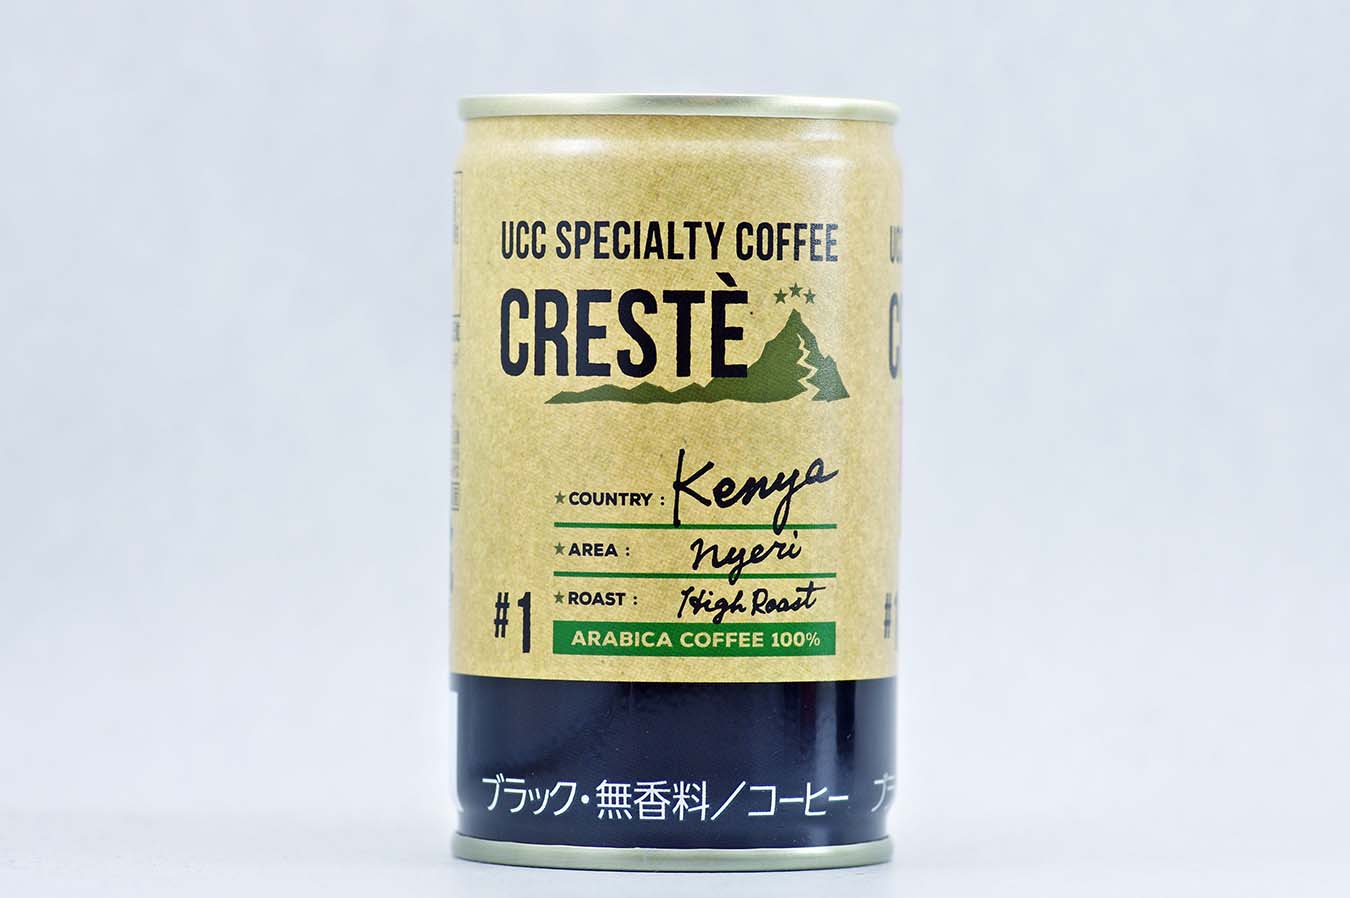 UCC SPECIALTY COFFEE CRESTÈ 2015年10月